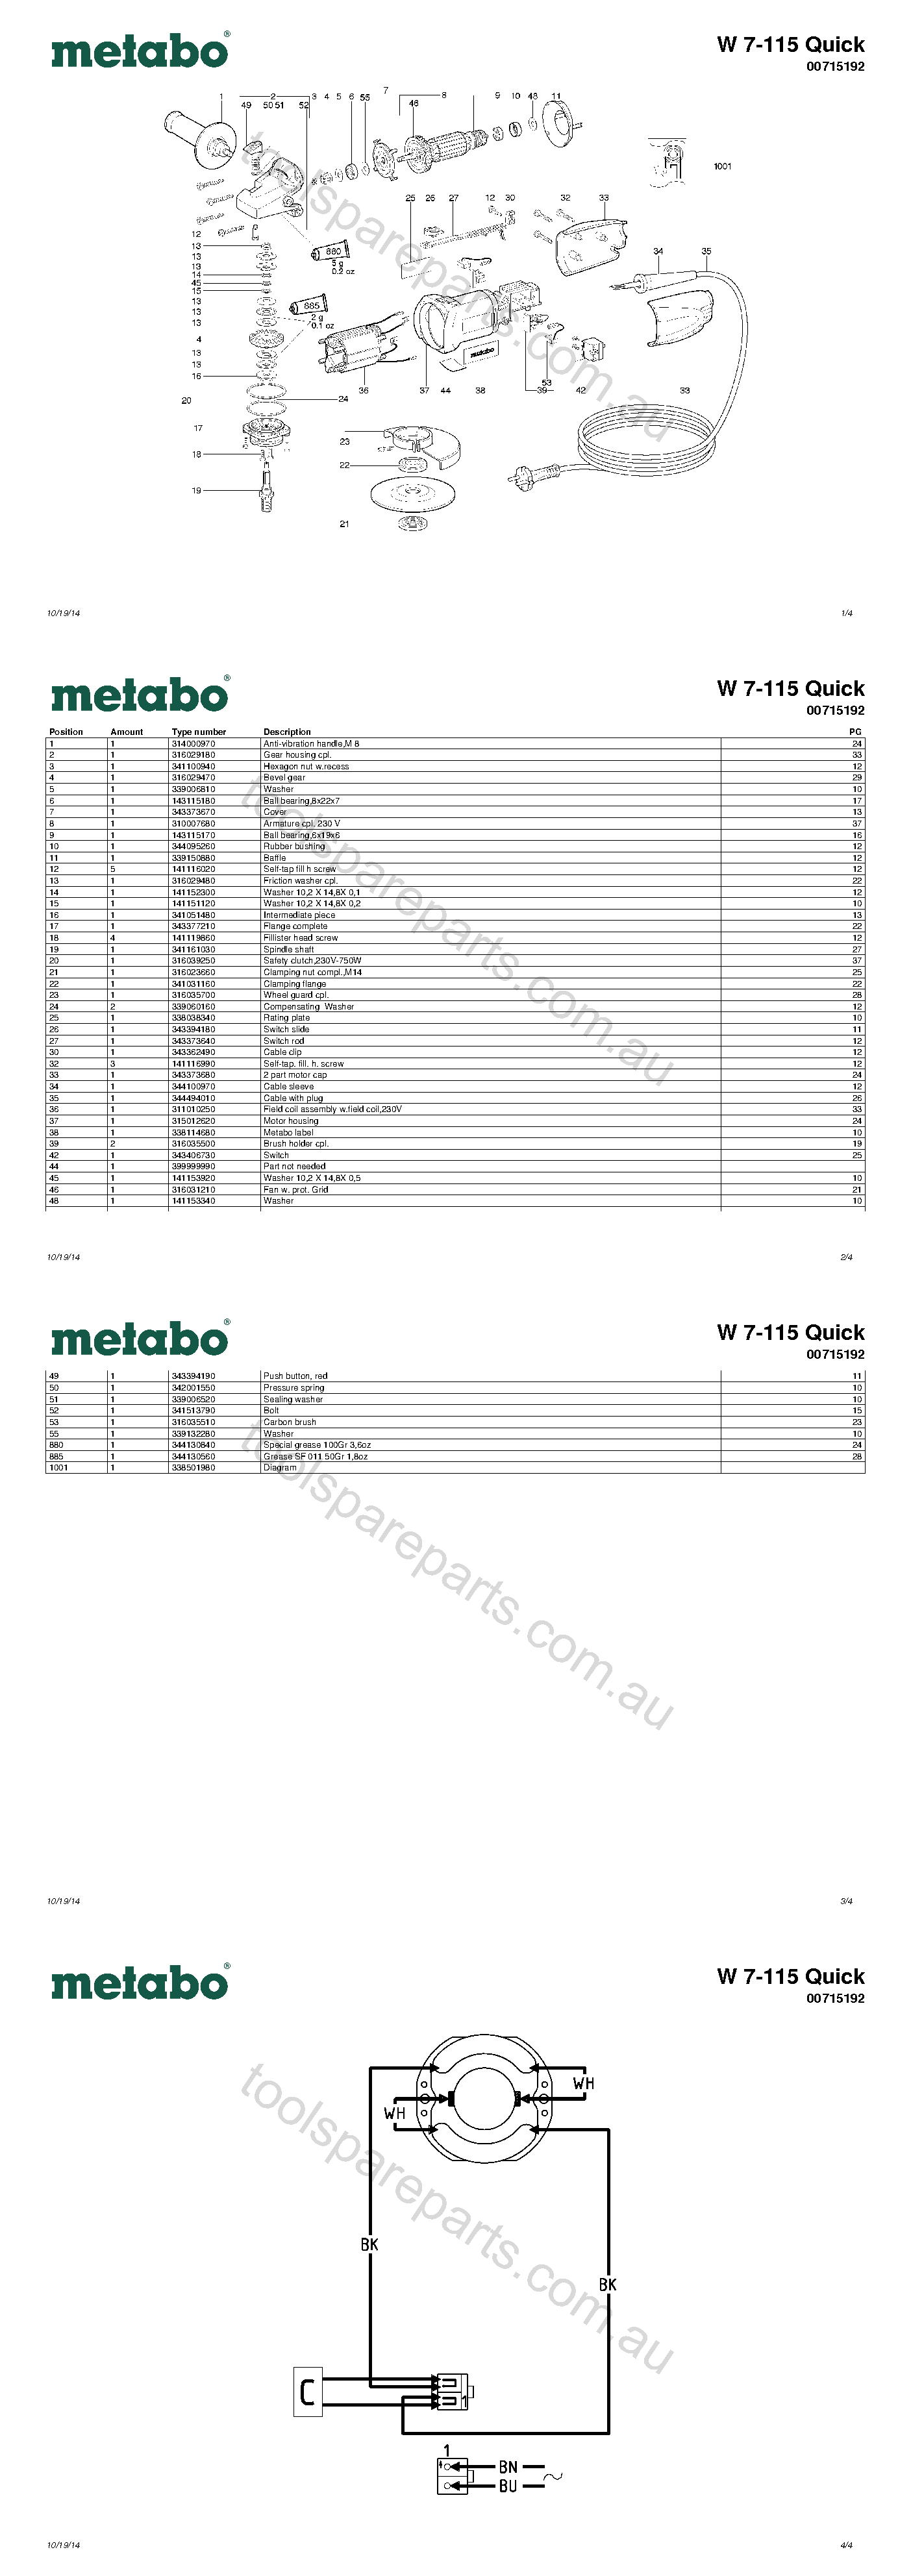 Metabo W 7-115 Quick 00715192  Diagram 1